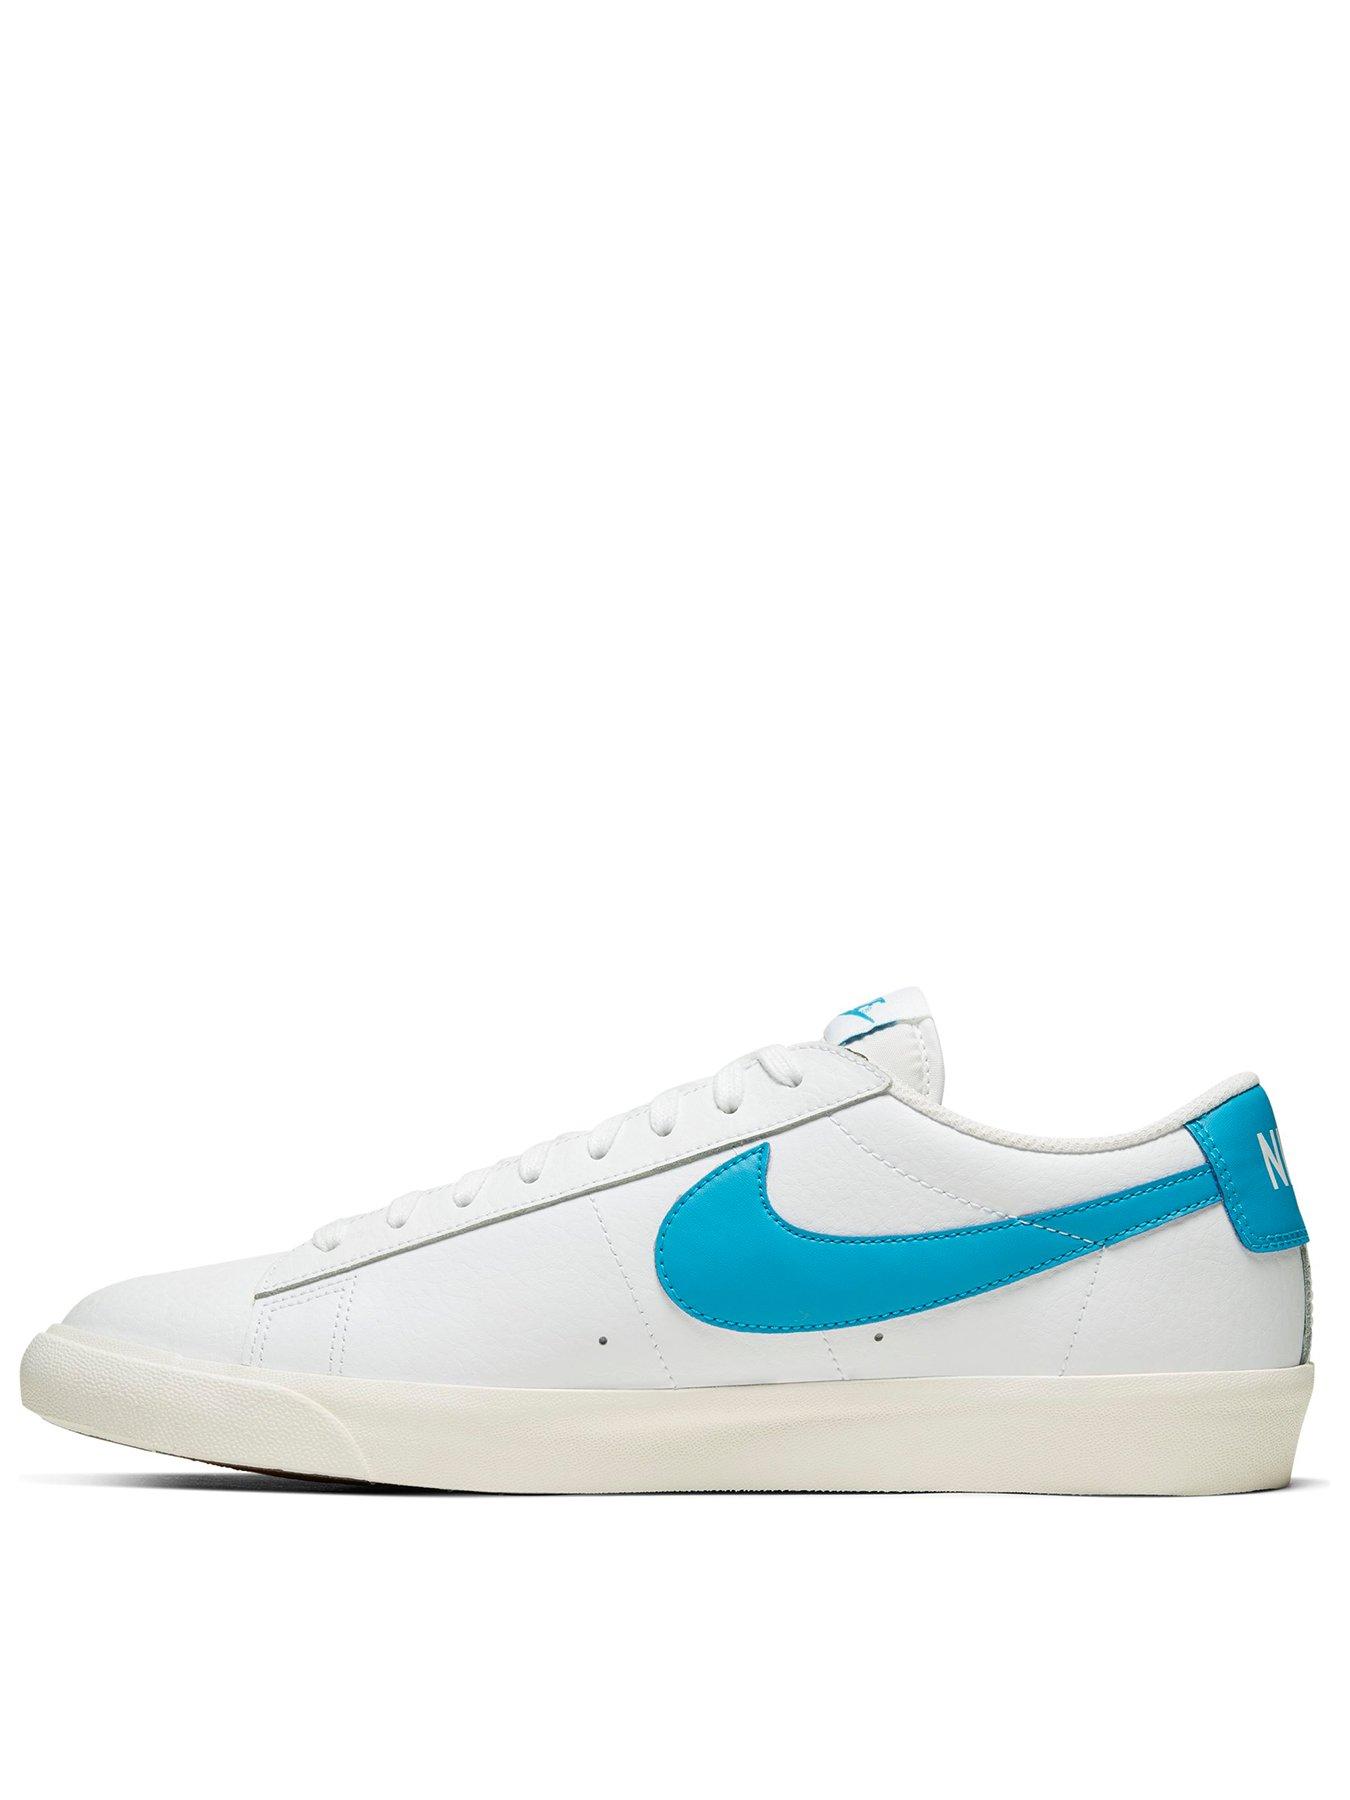 Nike Blazer Low Leather White Blue Very Co Uk